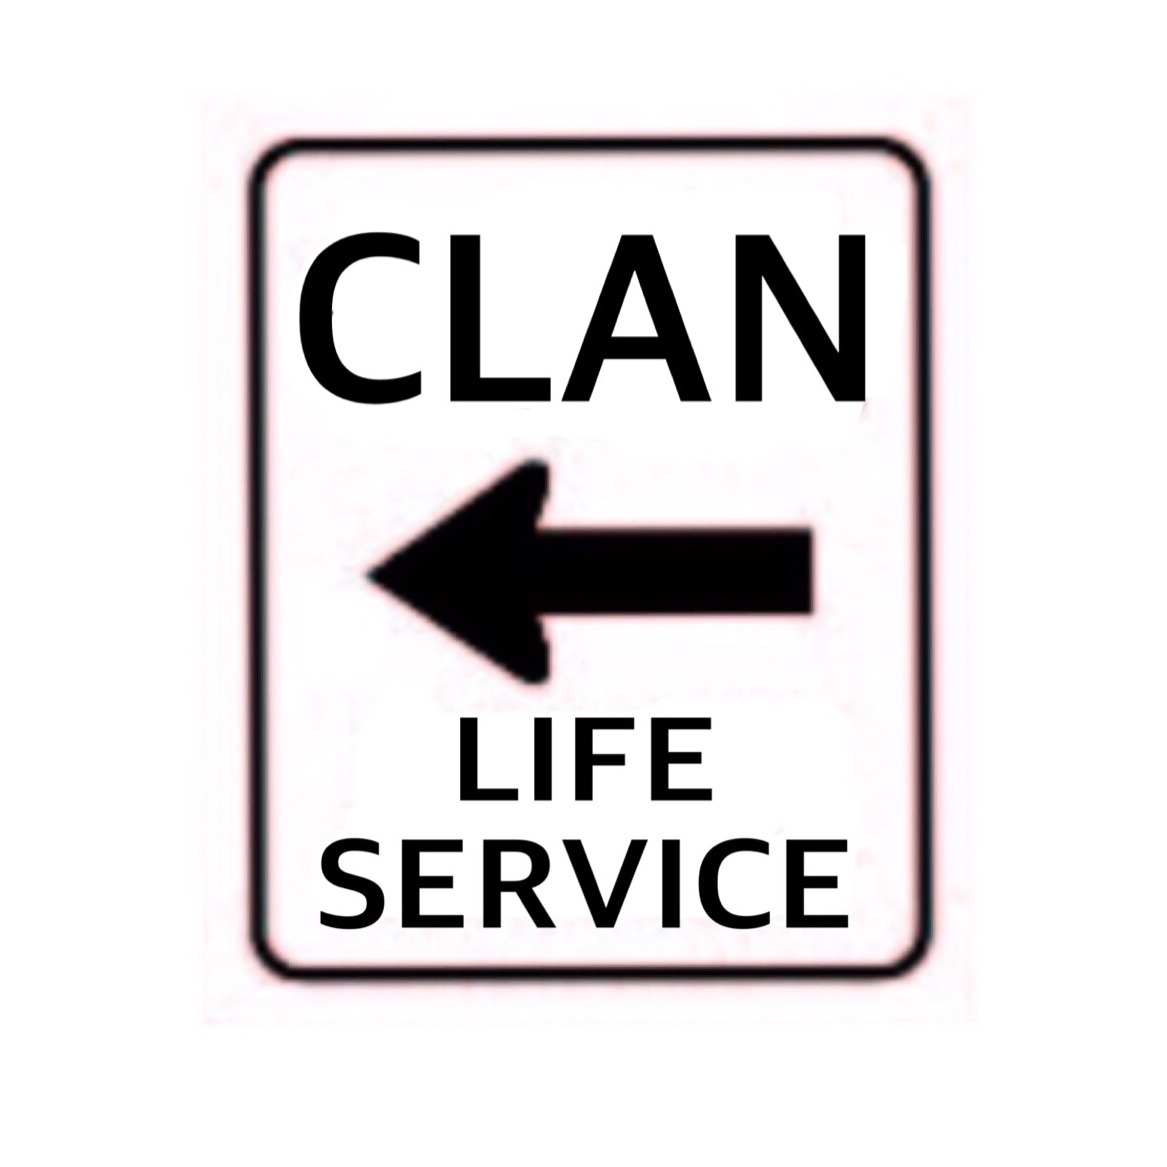 CLAN LIFE SERVICE